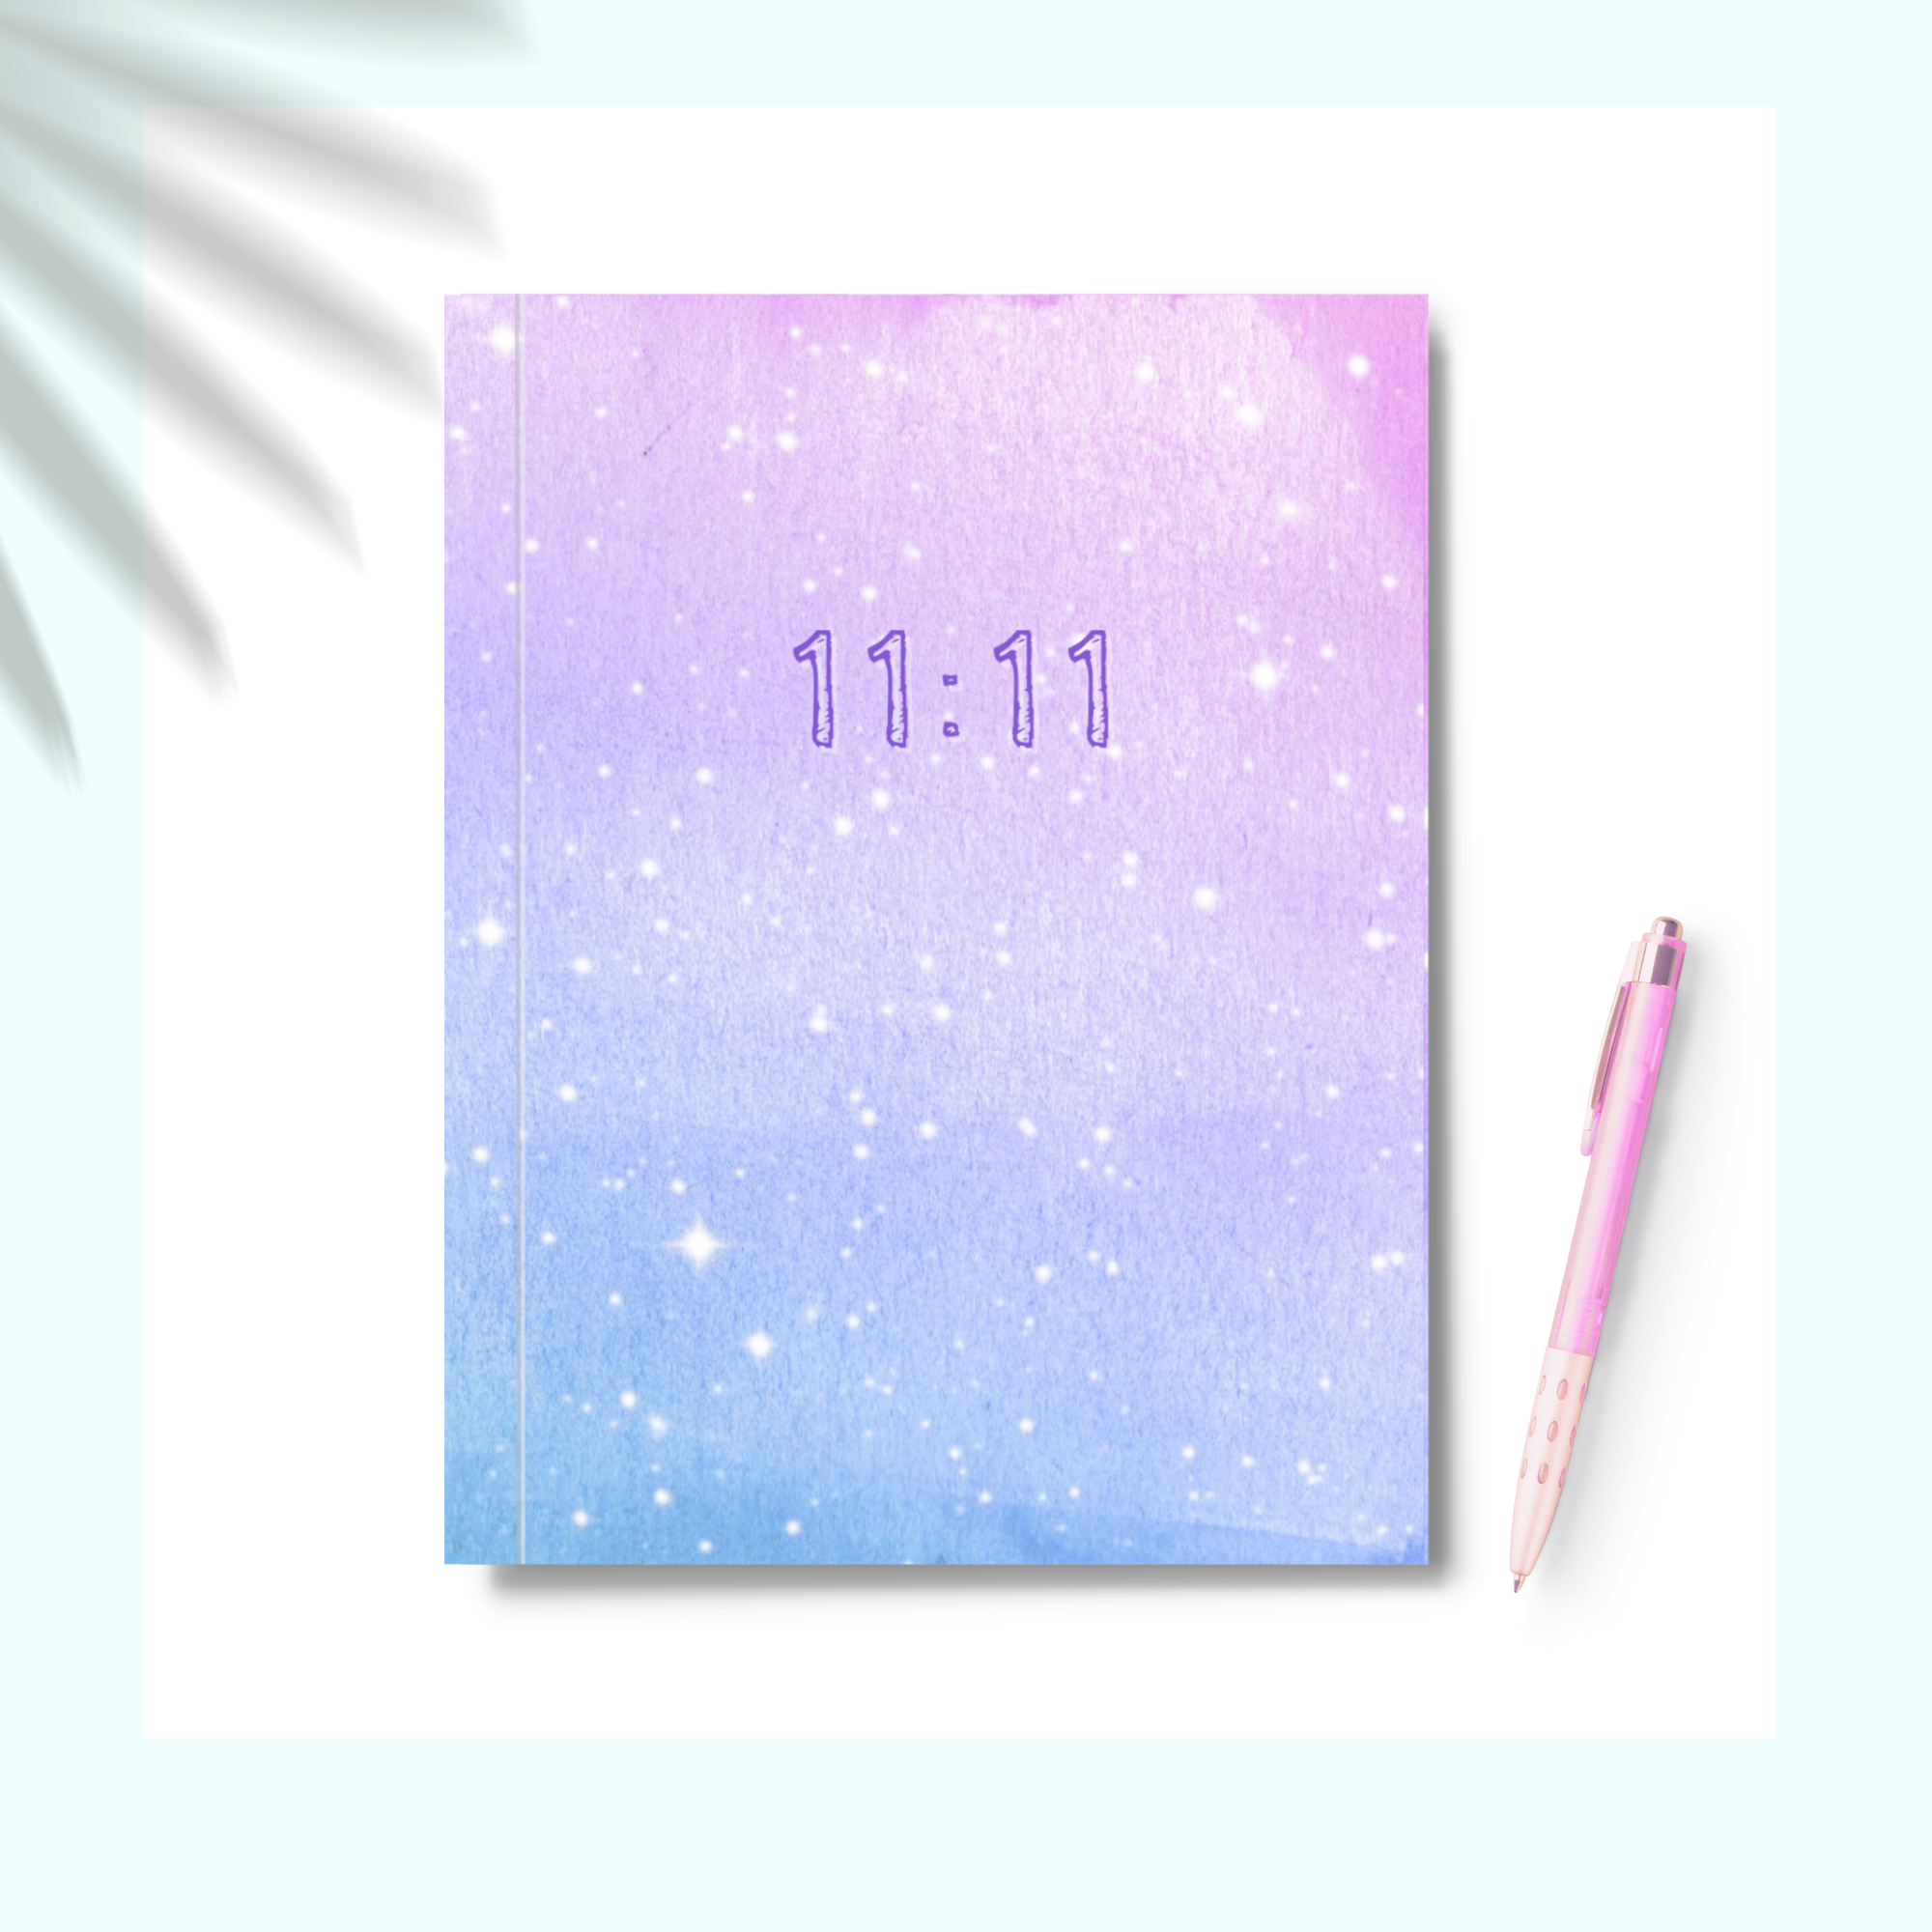 11:11 Angel Number Notebook